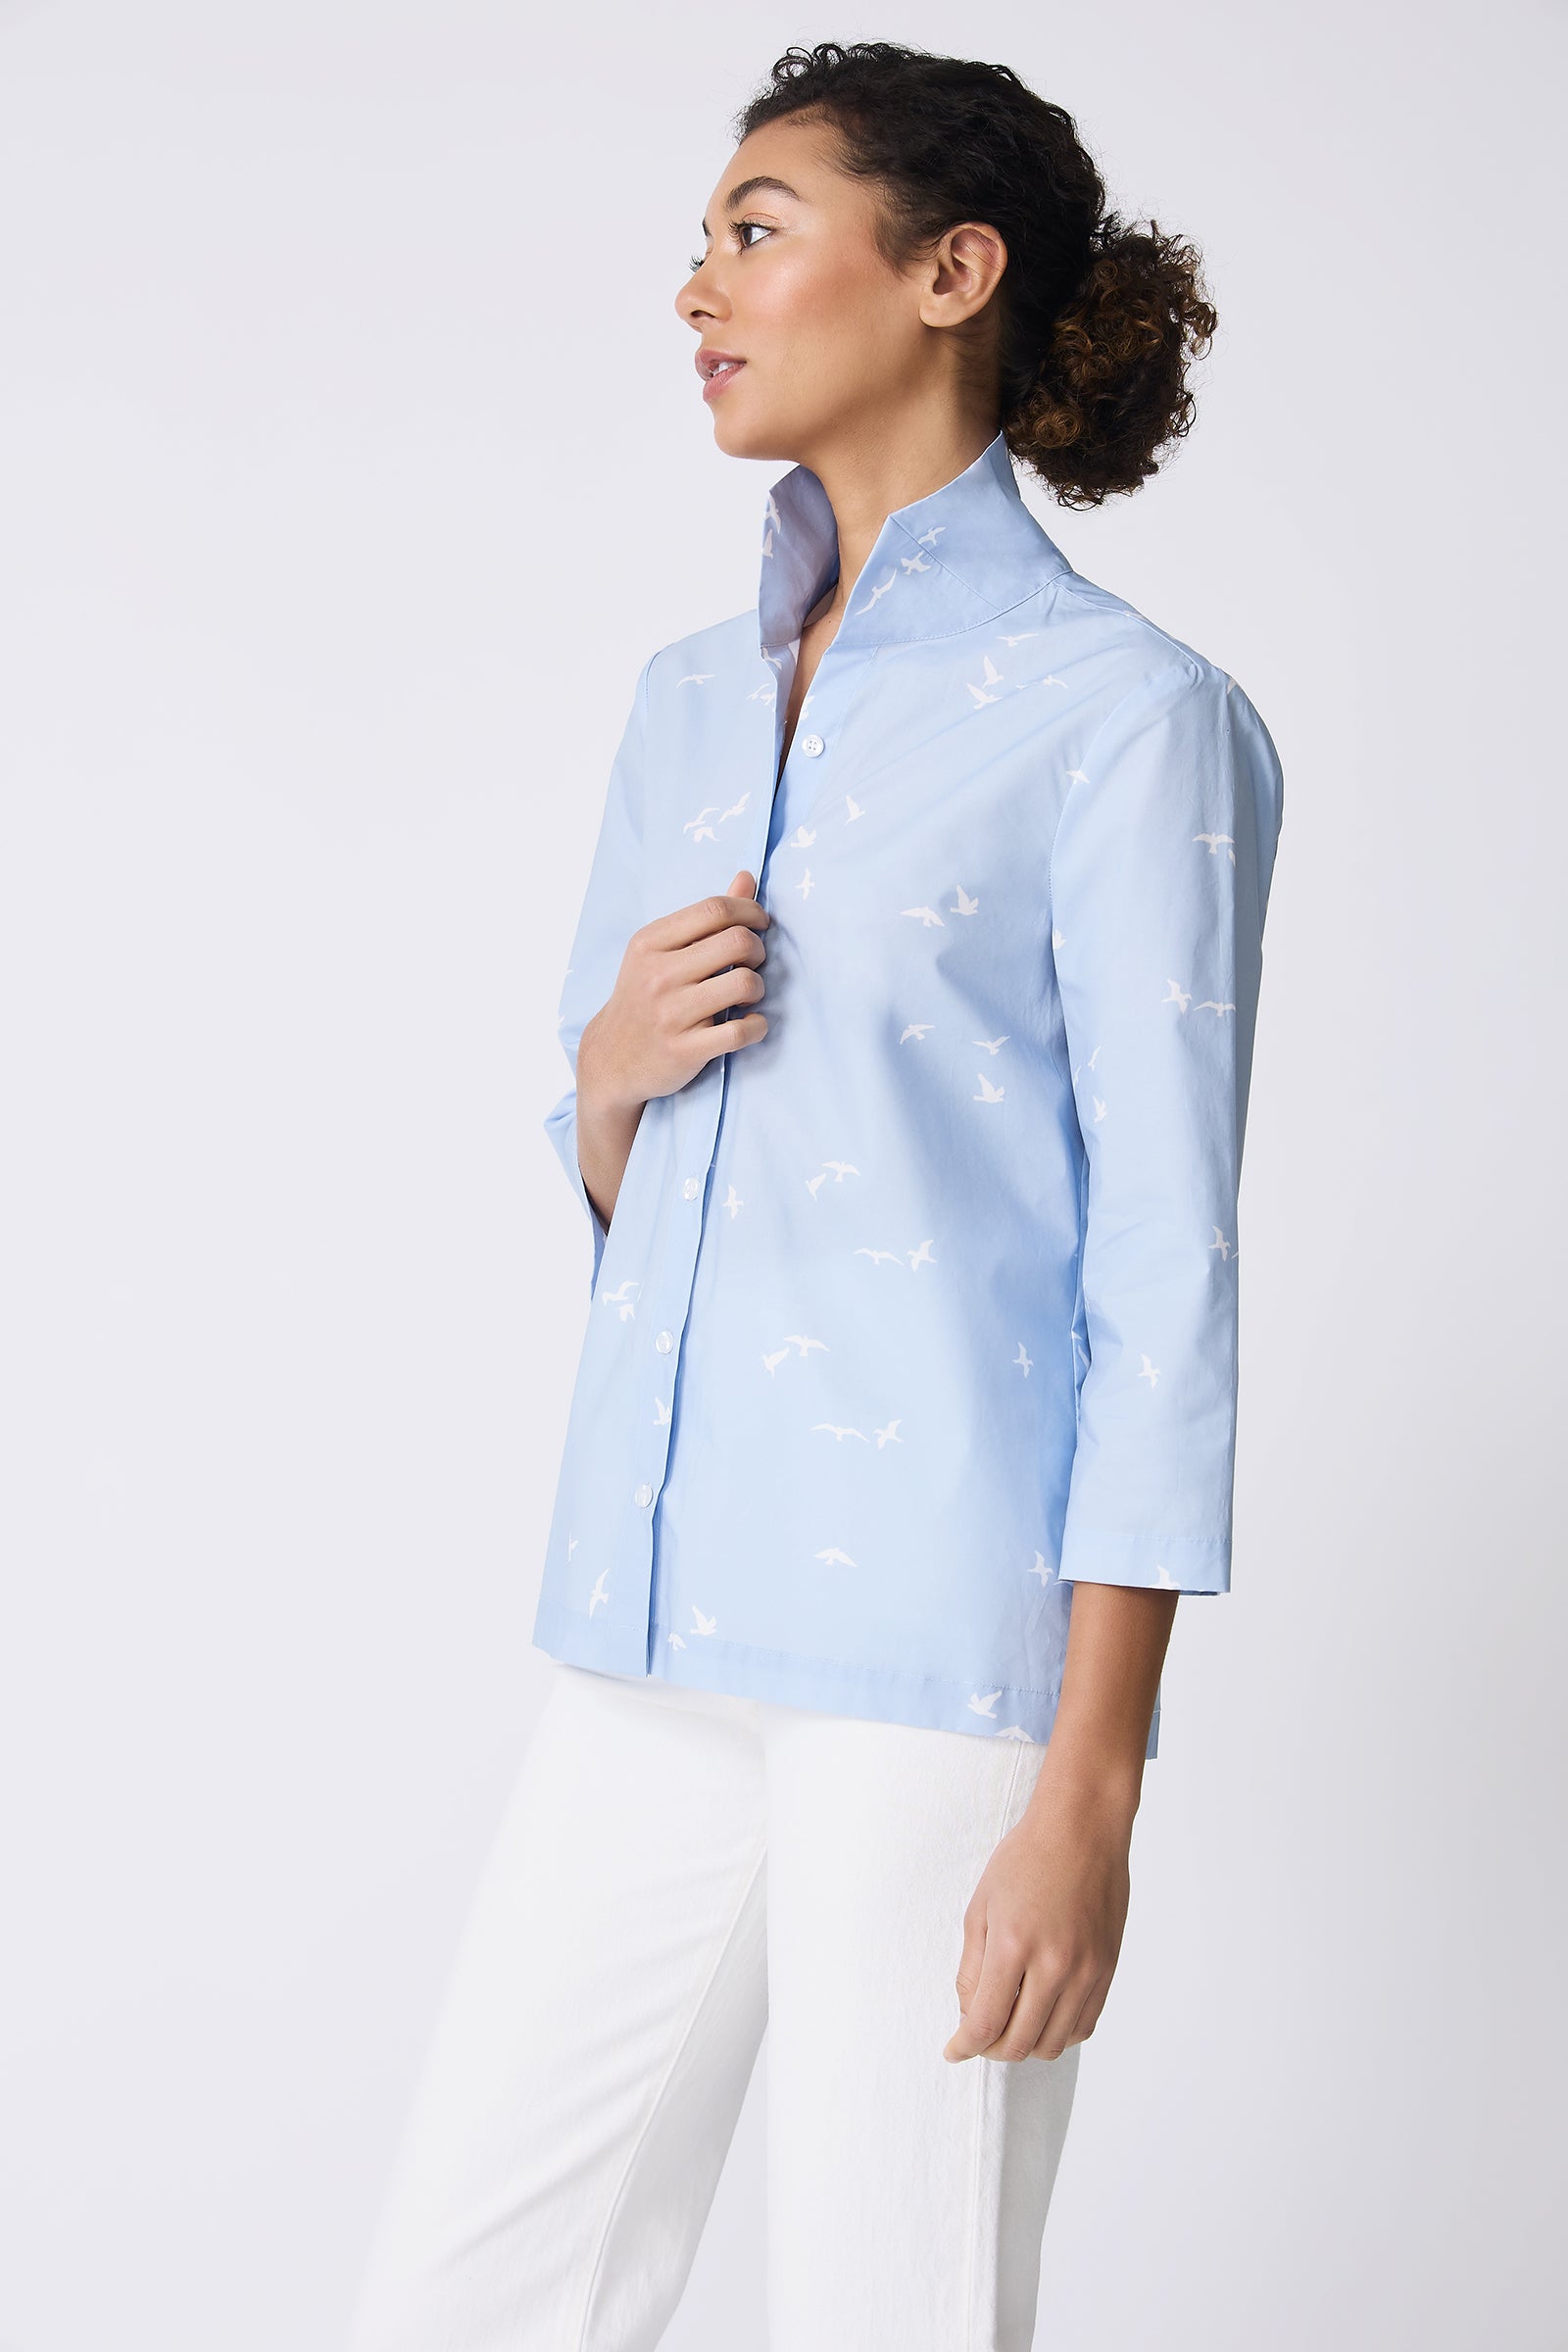 Kal Rieman 3/4 Sleeve Ginna Shirt in Oxford Blue Bird Print on model side view alternate